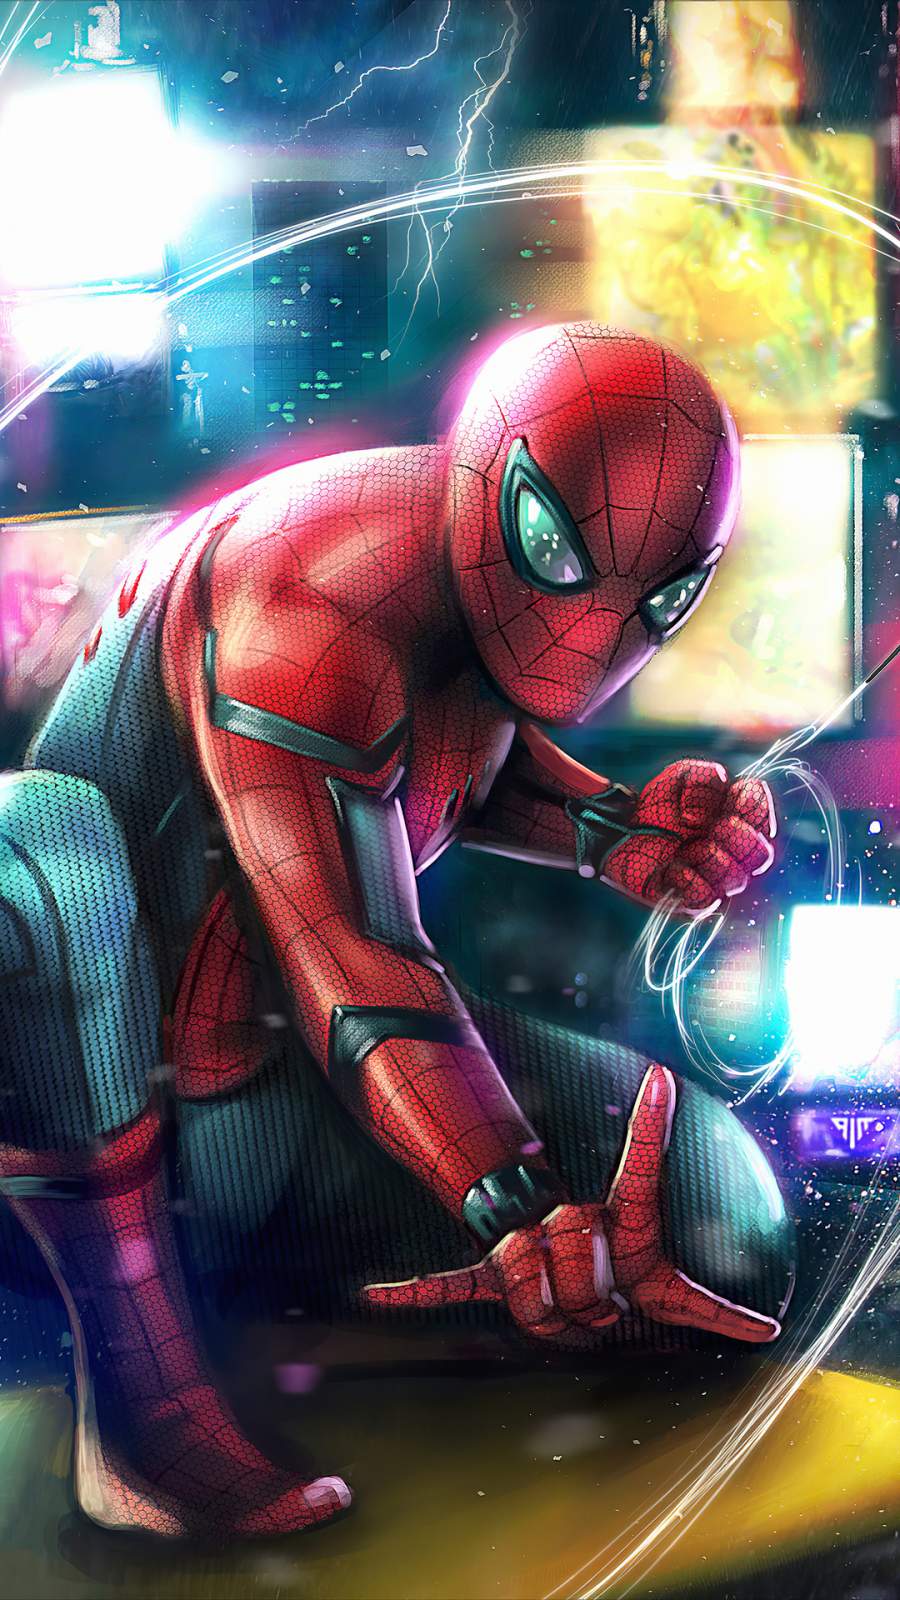 Download wallpaper 1125x2436 spiderman iron suit art movie iphone x  1125x2436 hd background 9148